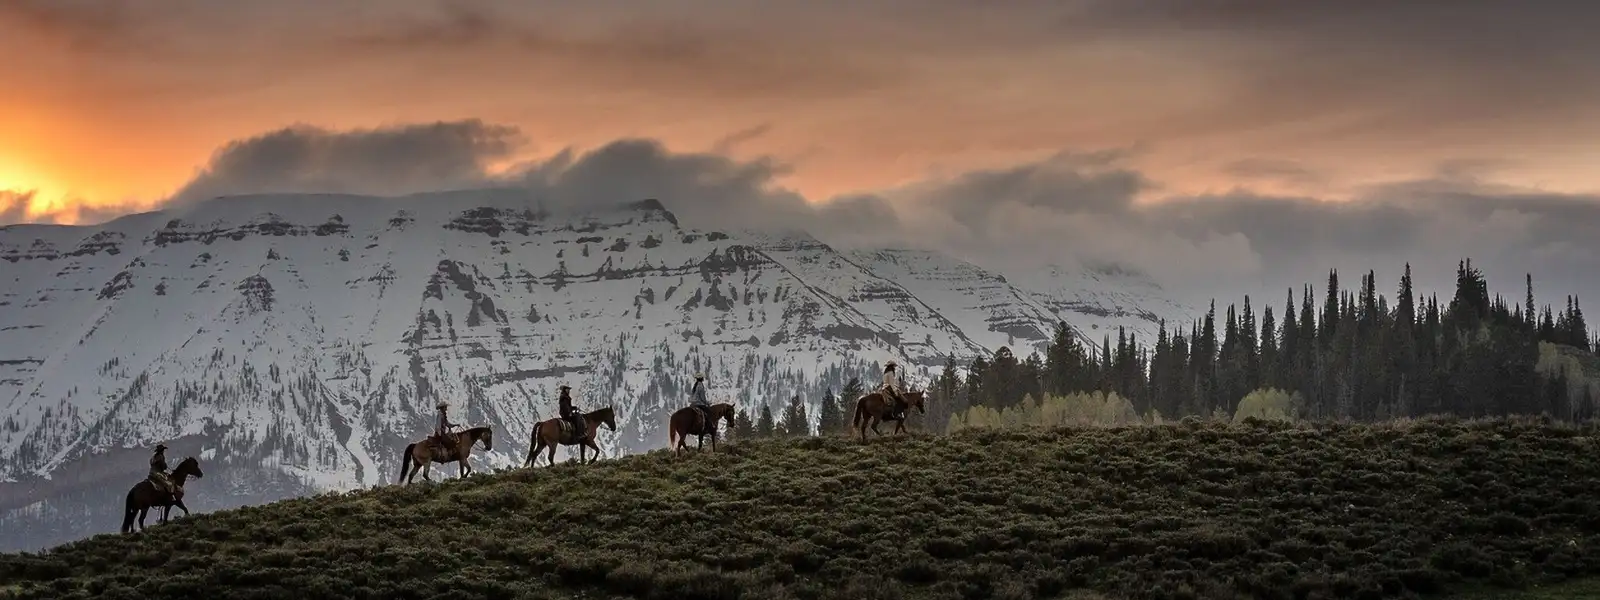 Five people riding on horseback through the Bridger-Teton National Forest.